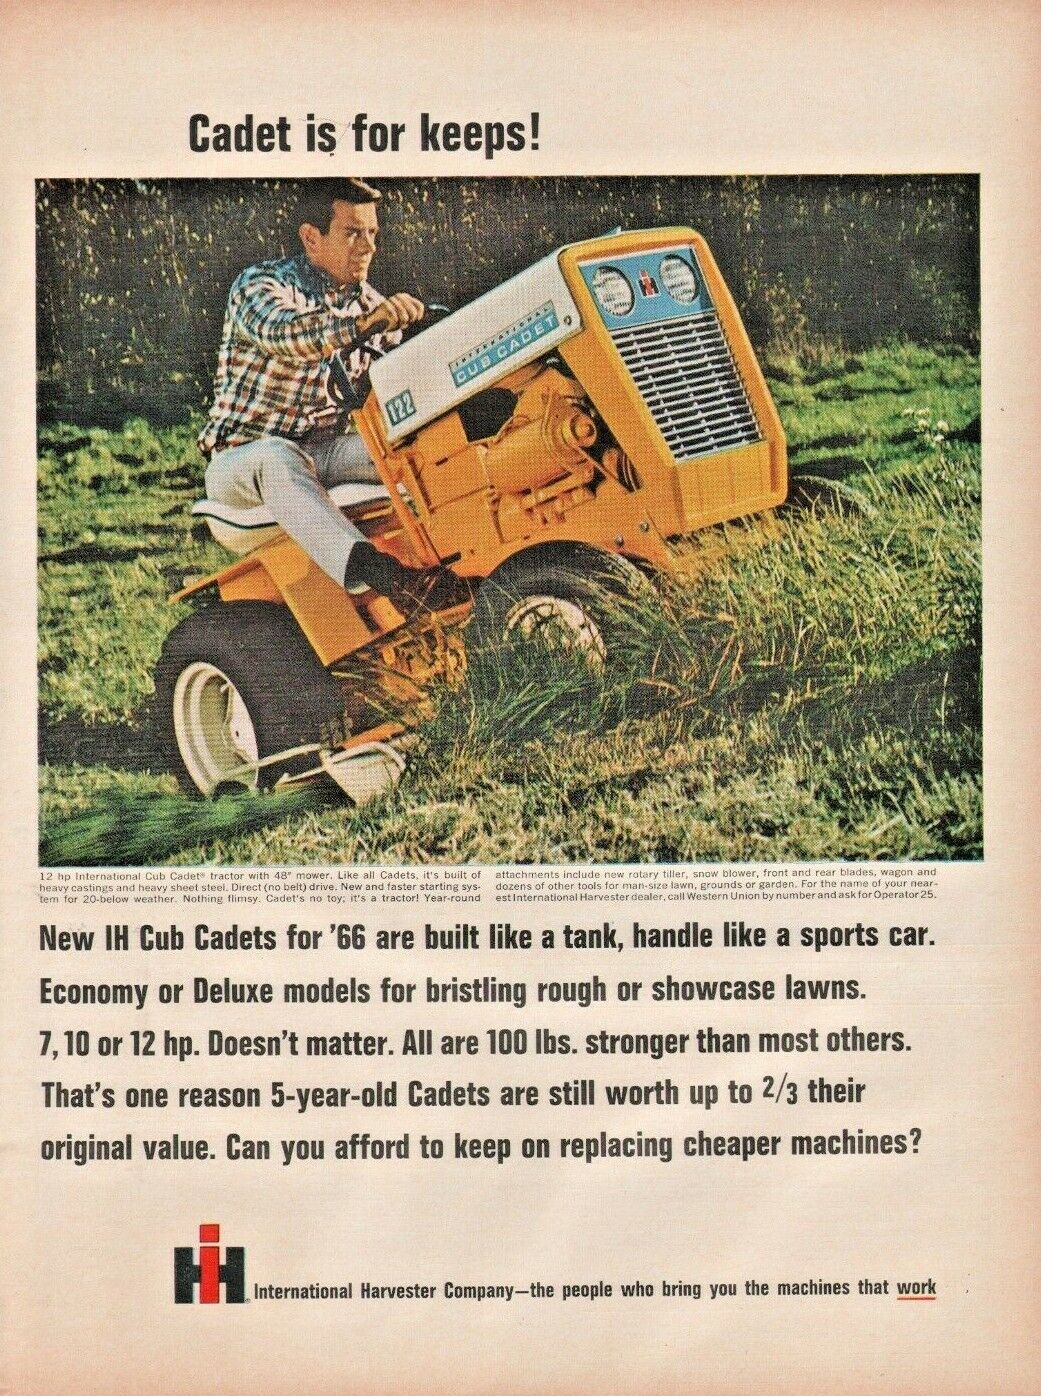 1966 International Harvester Cub Cadet Lawn Tractor - Vintage Ad